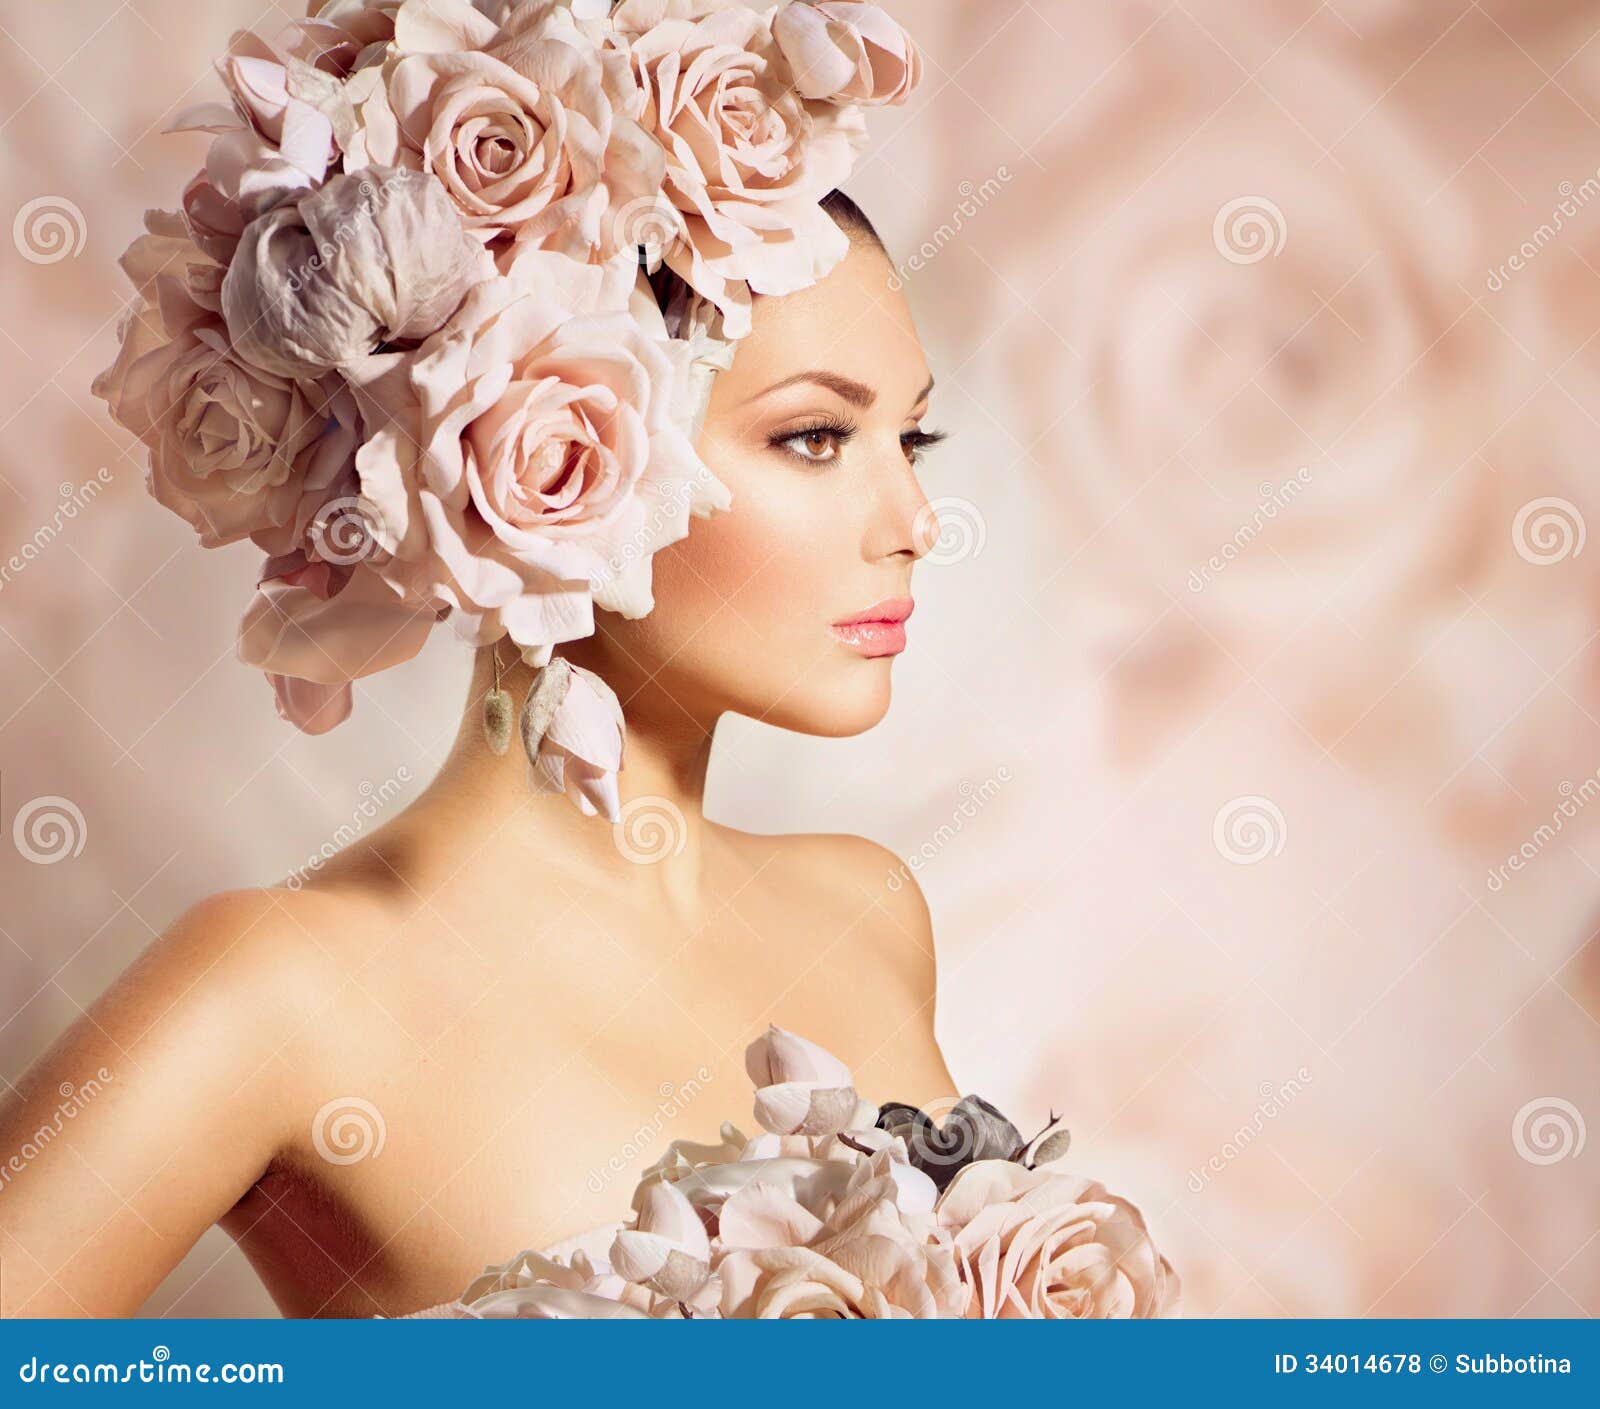 udobnost, izazov - Page 16 Model-girl-flowers-hair-fashion-beauty-bride-34014678